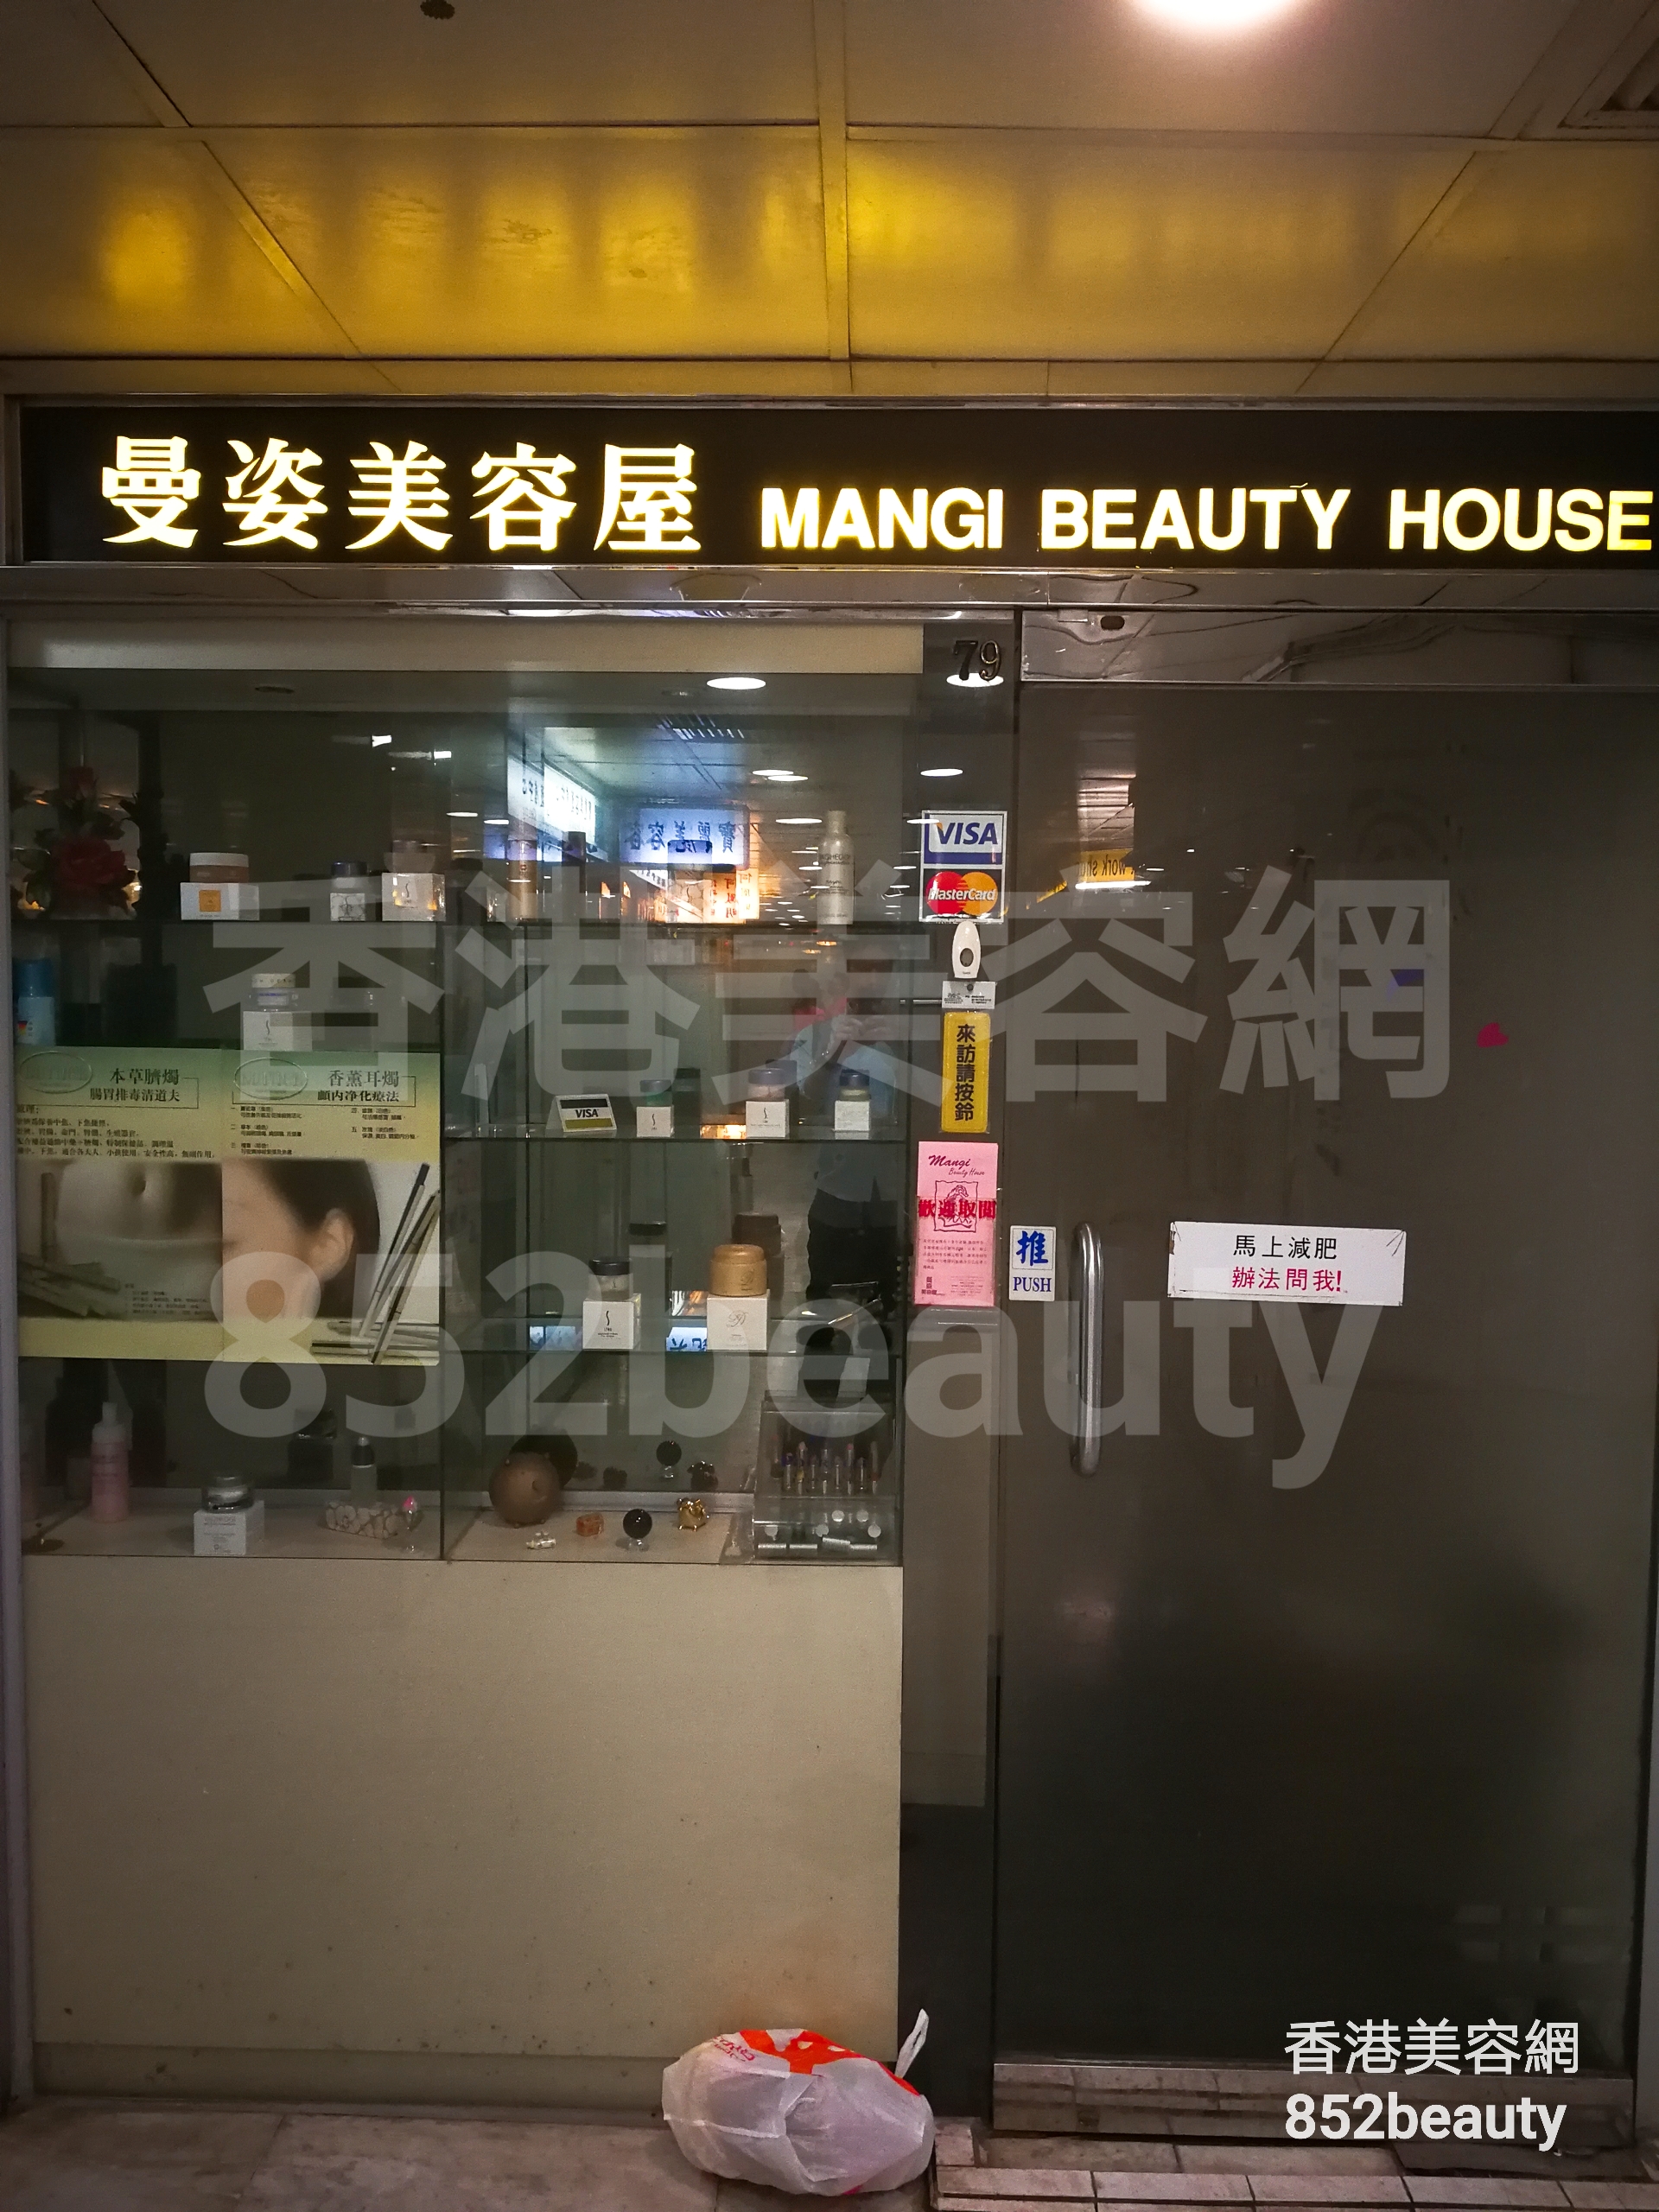 Hair Removal: Mangi Beauty House